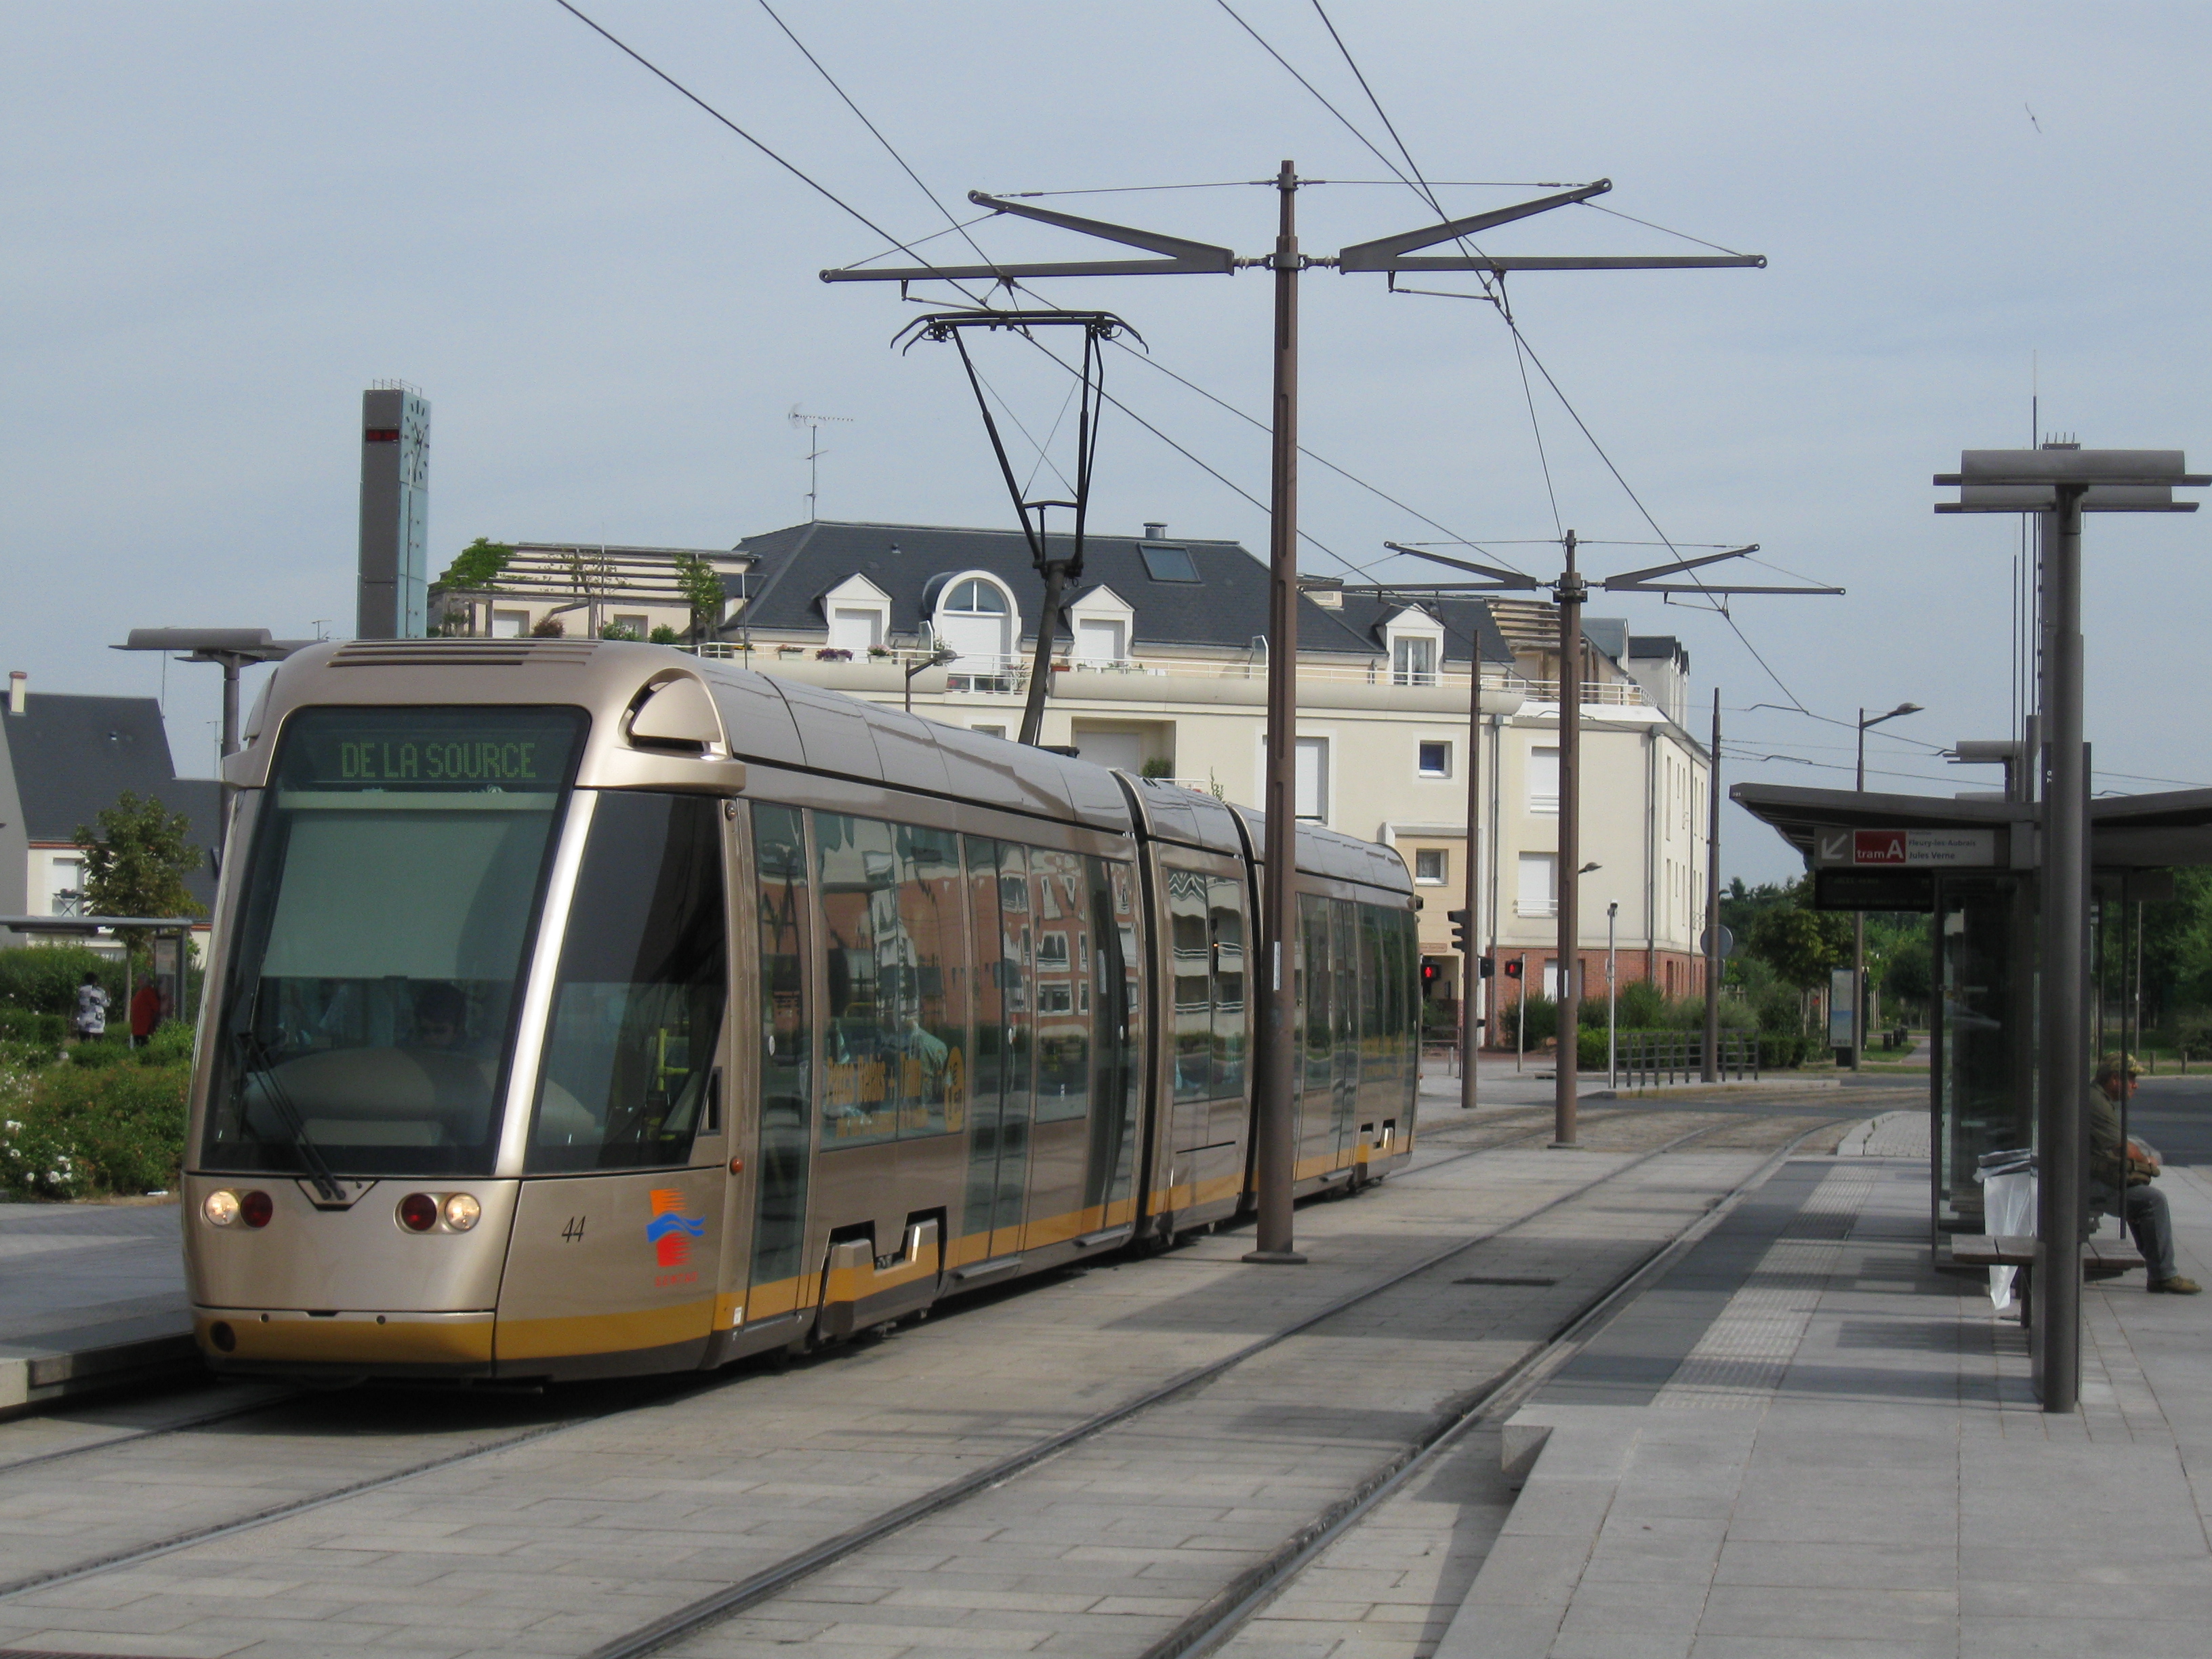 https://upload.wikimedia.org/wikipedia/commons/3/3d/Tramway_Orleans_Victor_Hugo.jpg